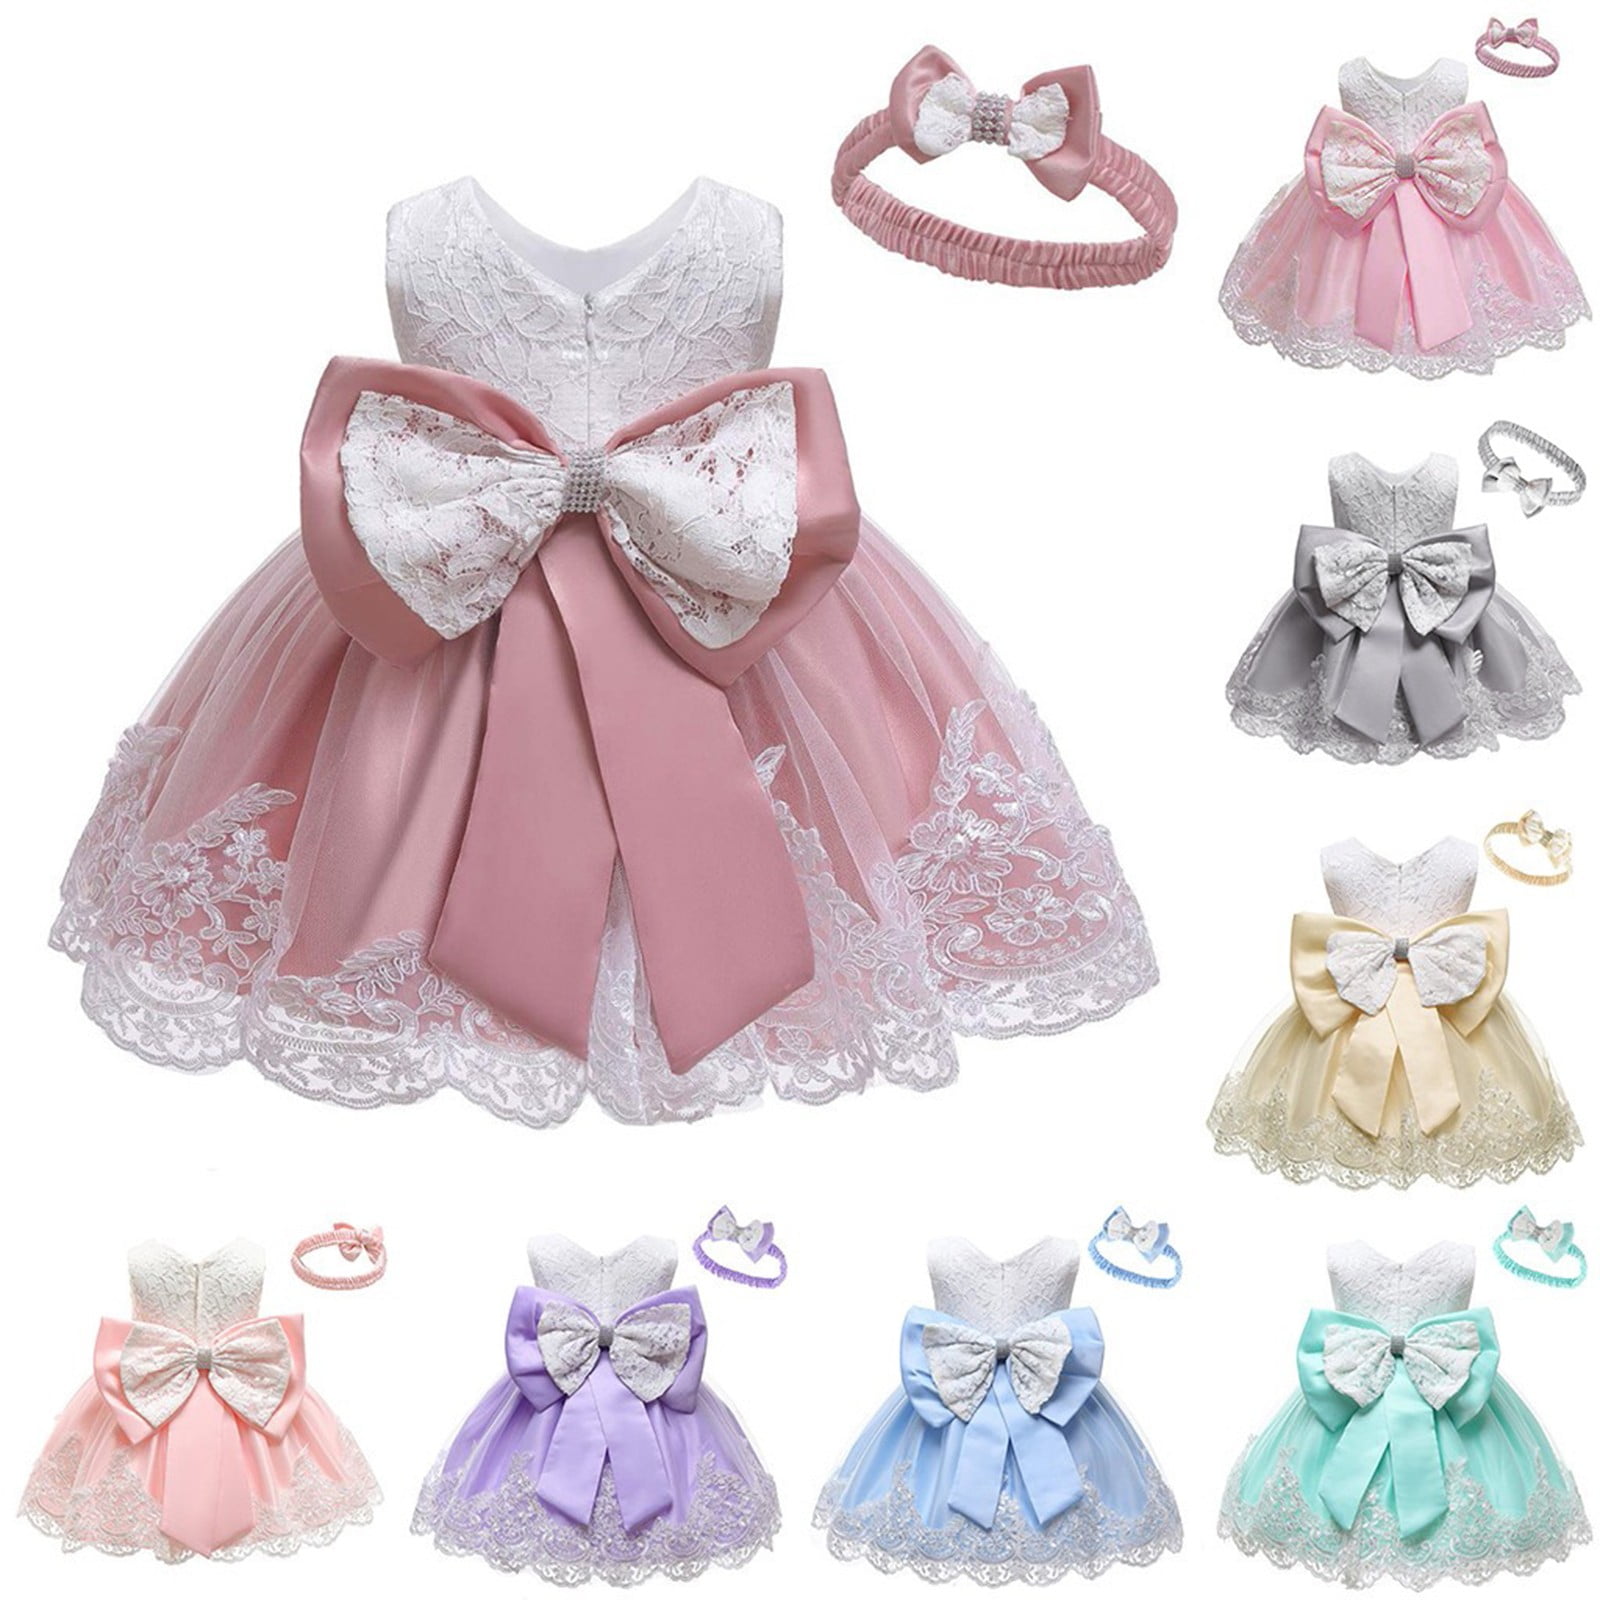 Newest Baby Girls Lace Bowknot Princess Wedding Formal Tutu Dress+Headband Set Clothes 0-24 Months Tutu Dress 